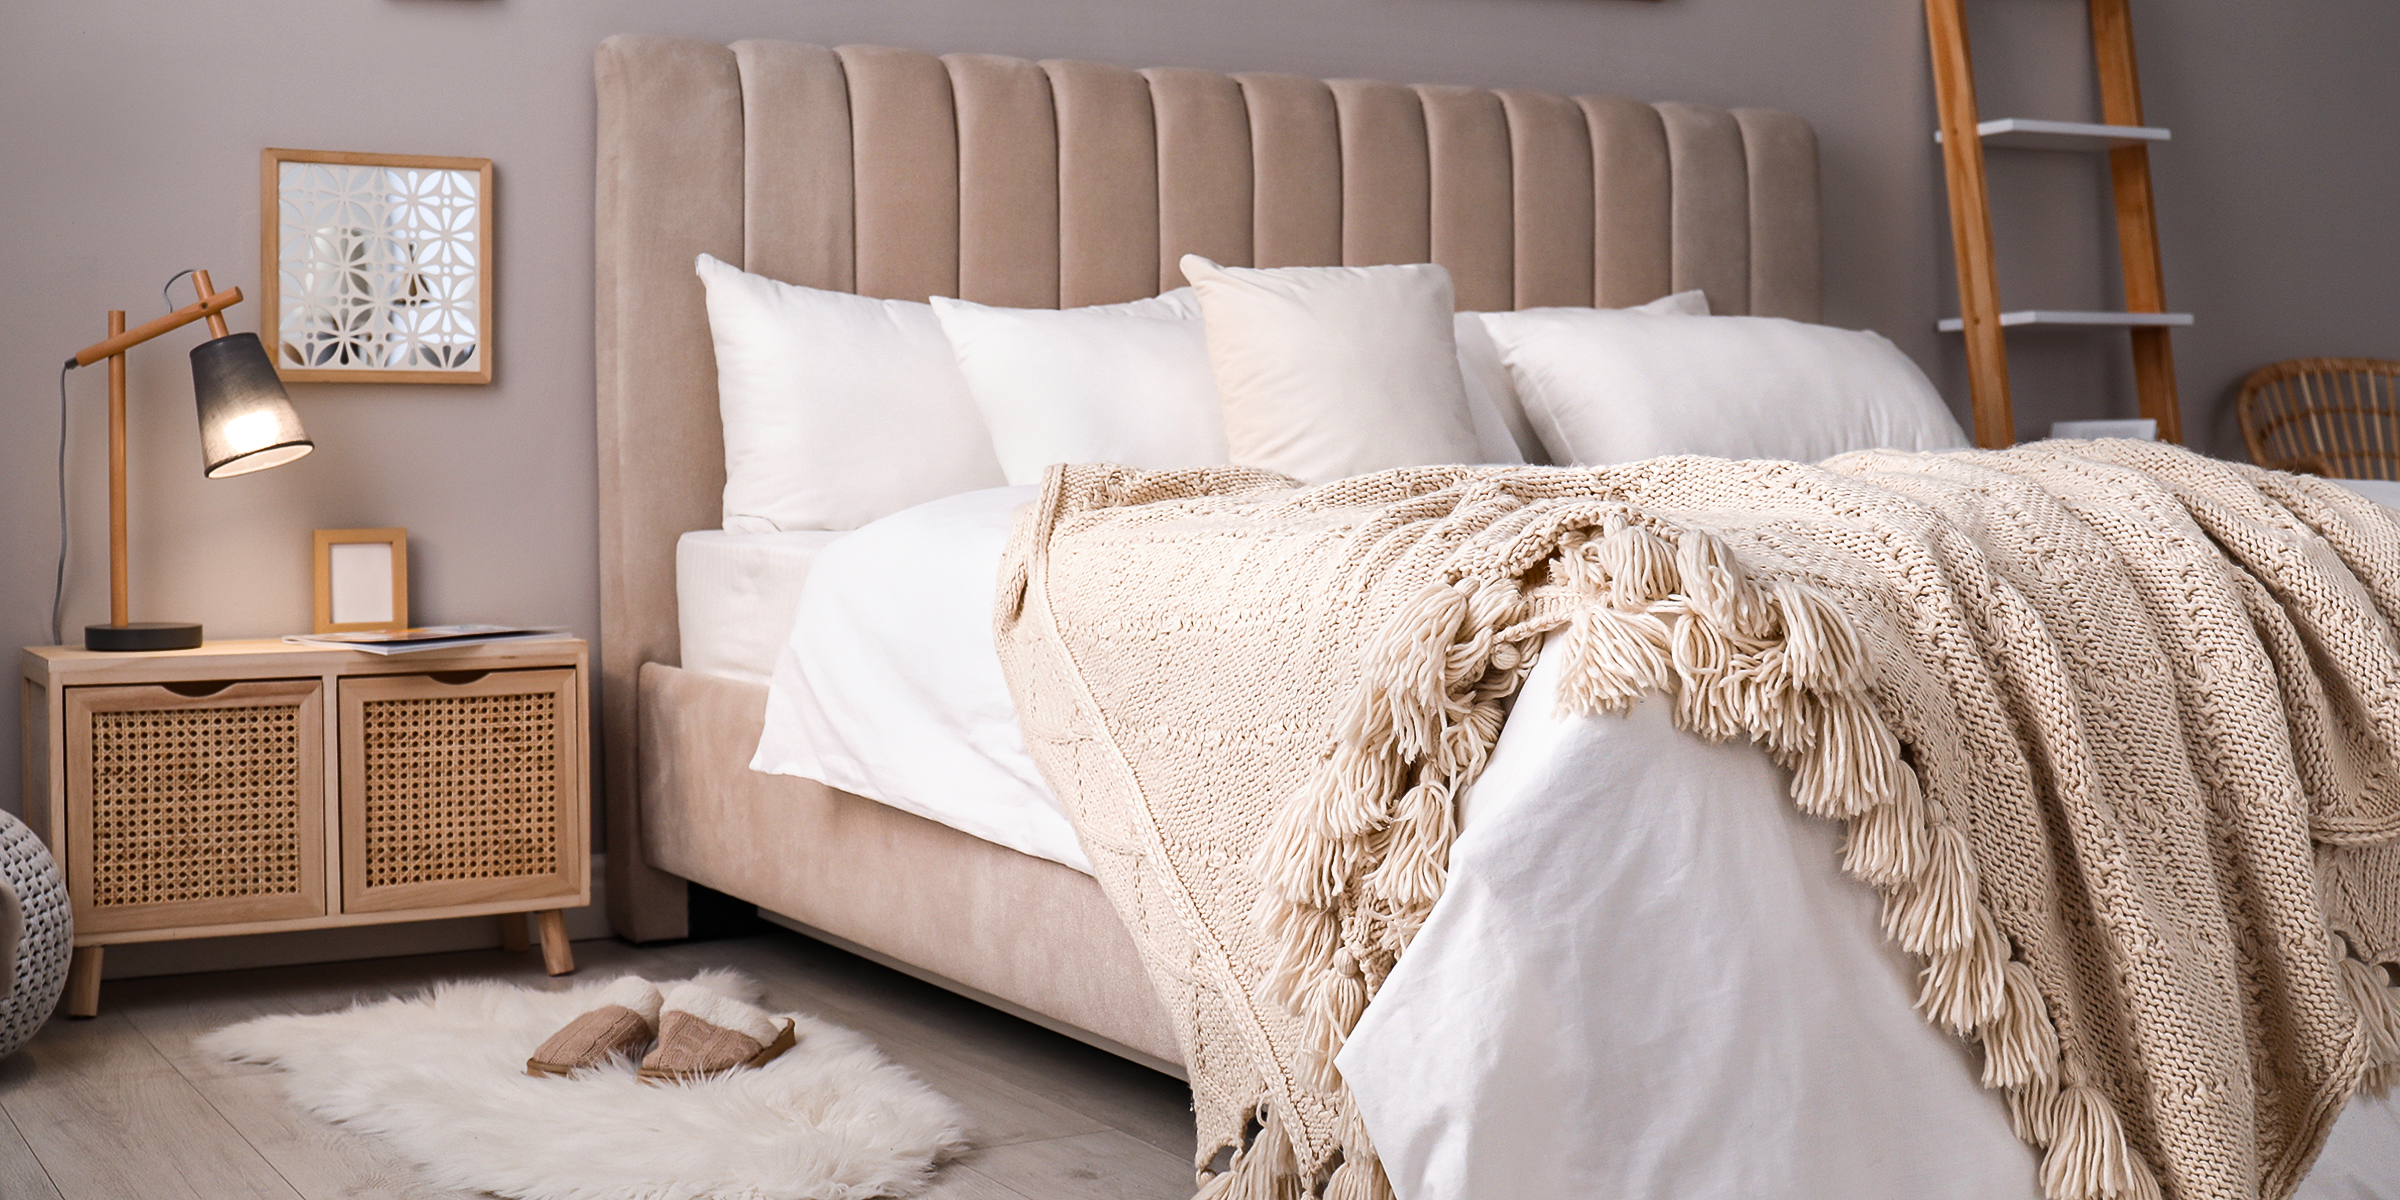 Une chambre à coucher | Source : Shutterstock